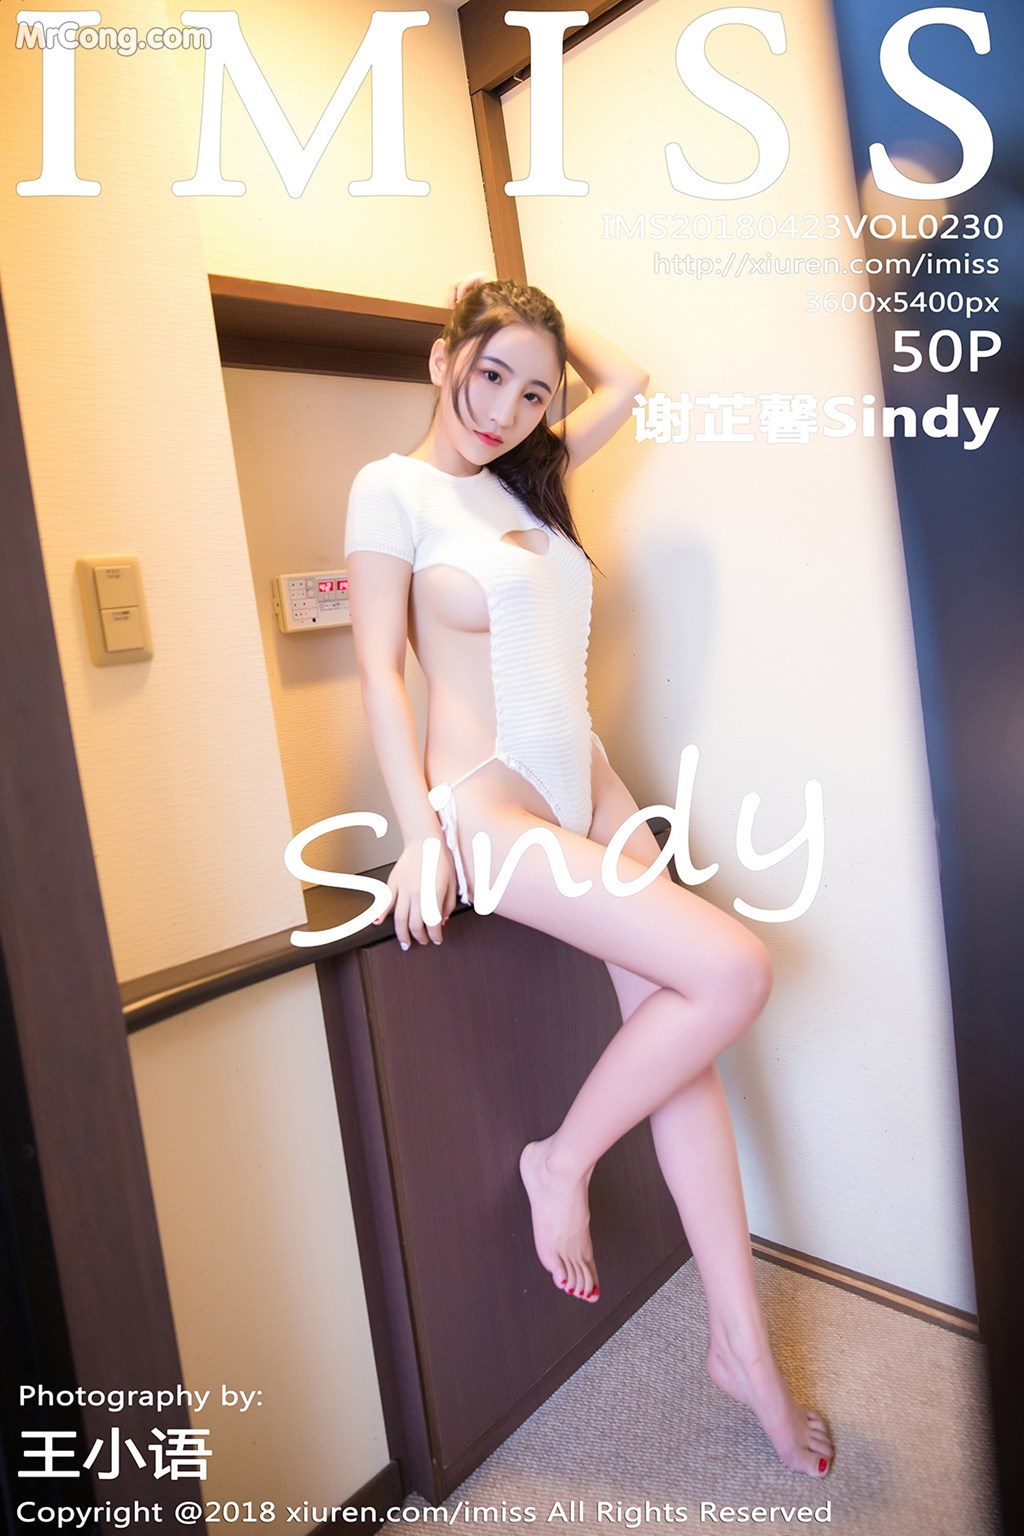 IMISS Vol.230: Model Sindy (谢芷馨) (51 photos)